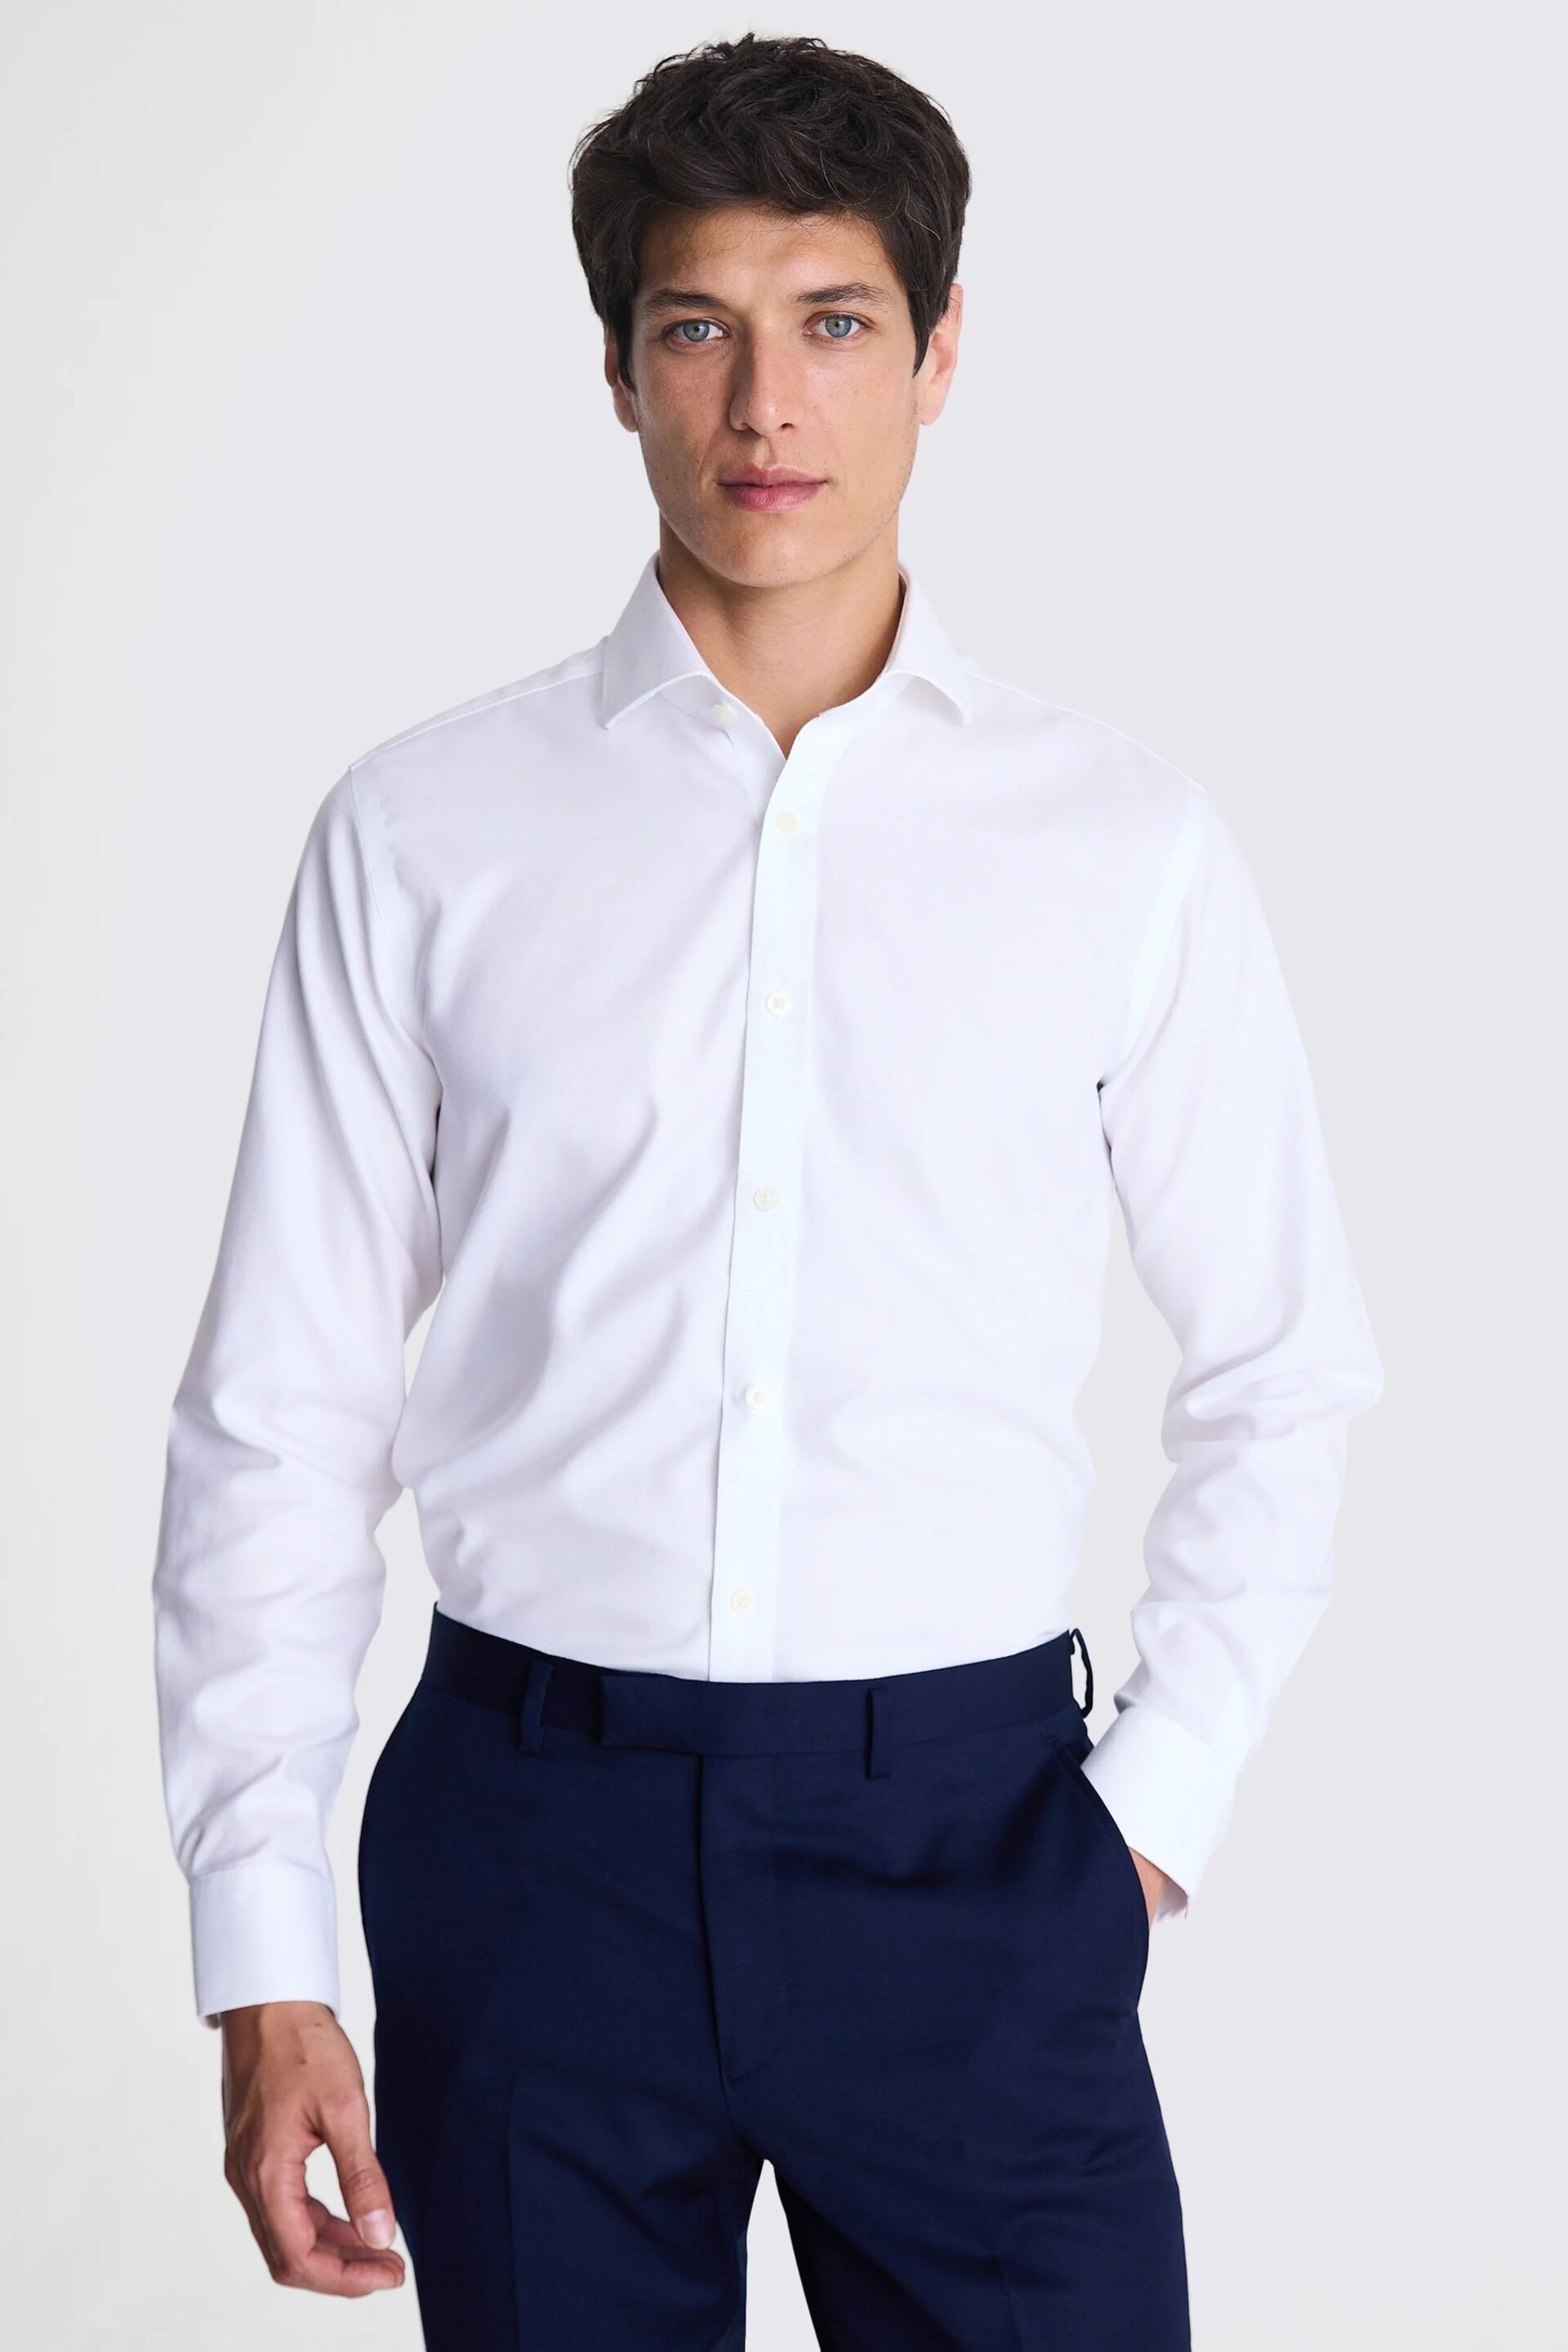 MOSS White Tailored Fit Textured Zero Iron Shirt - Image 1 of 4